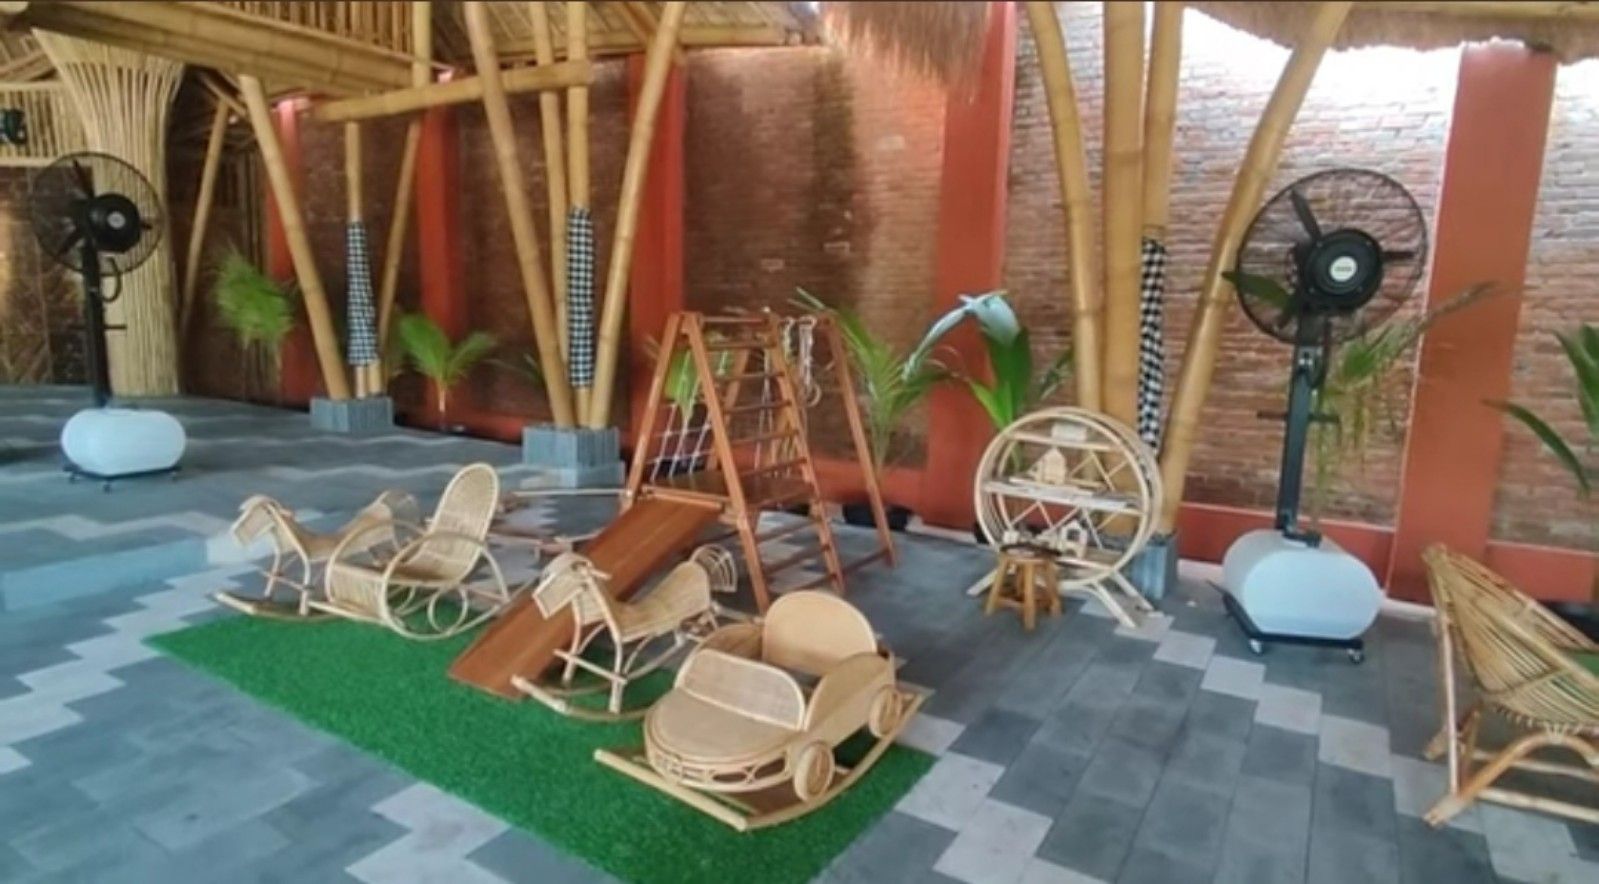 Area taman bermain mini di Bali House dan Kanca Space/tangkapan layar youtube/channel Mulai Yuk